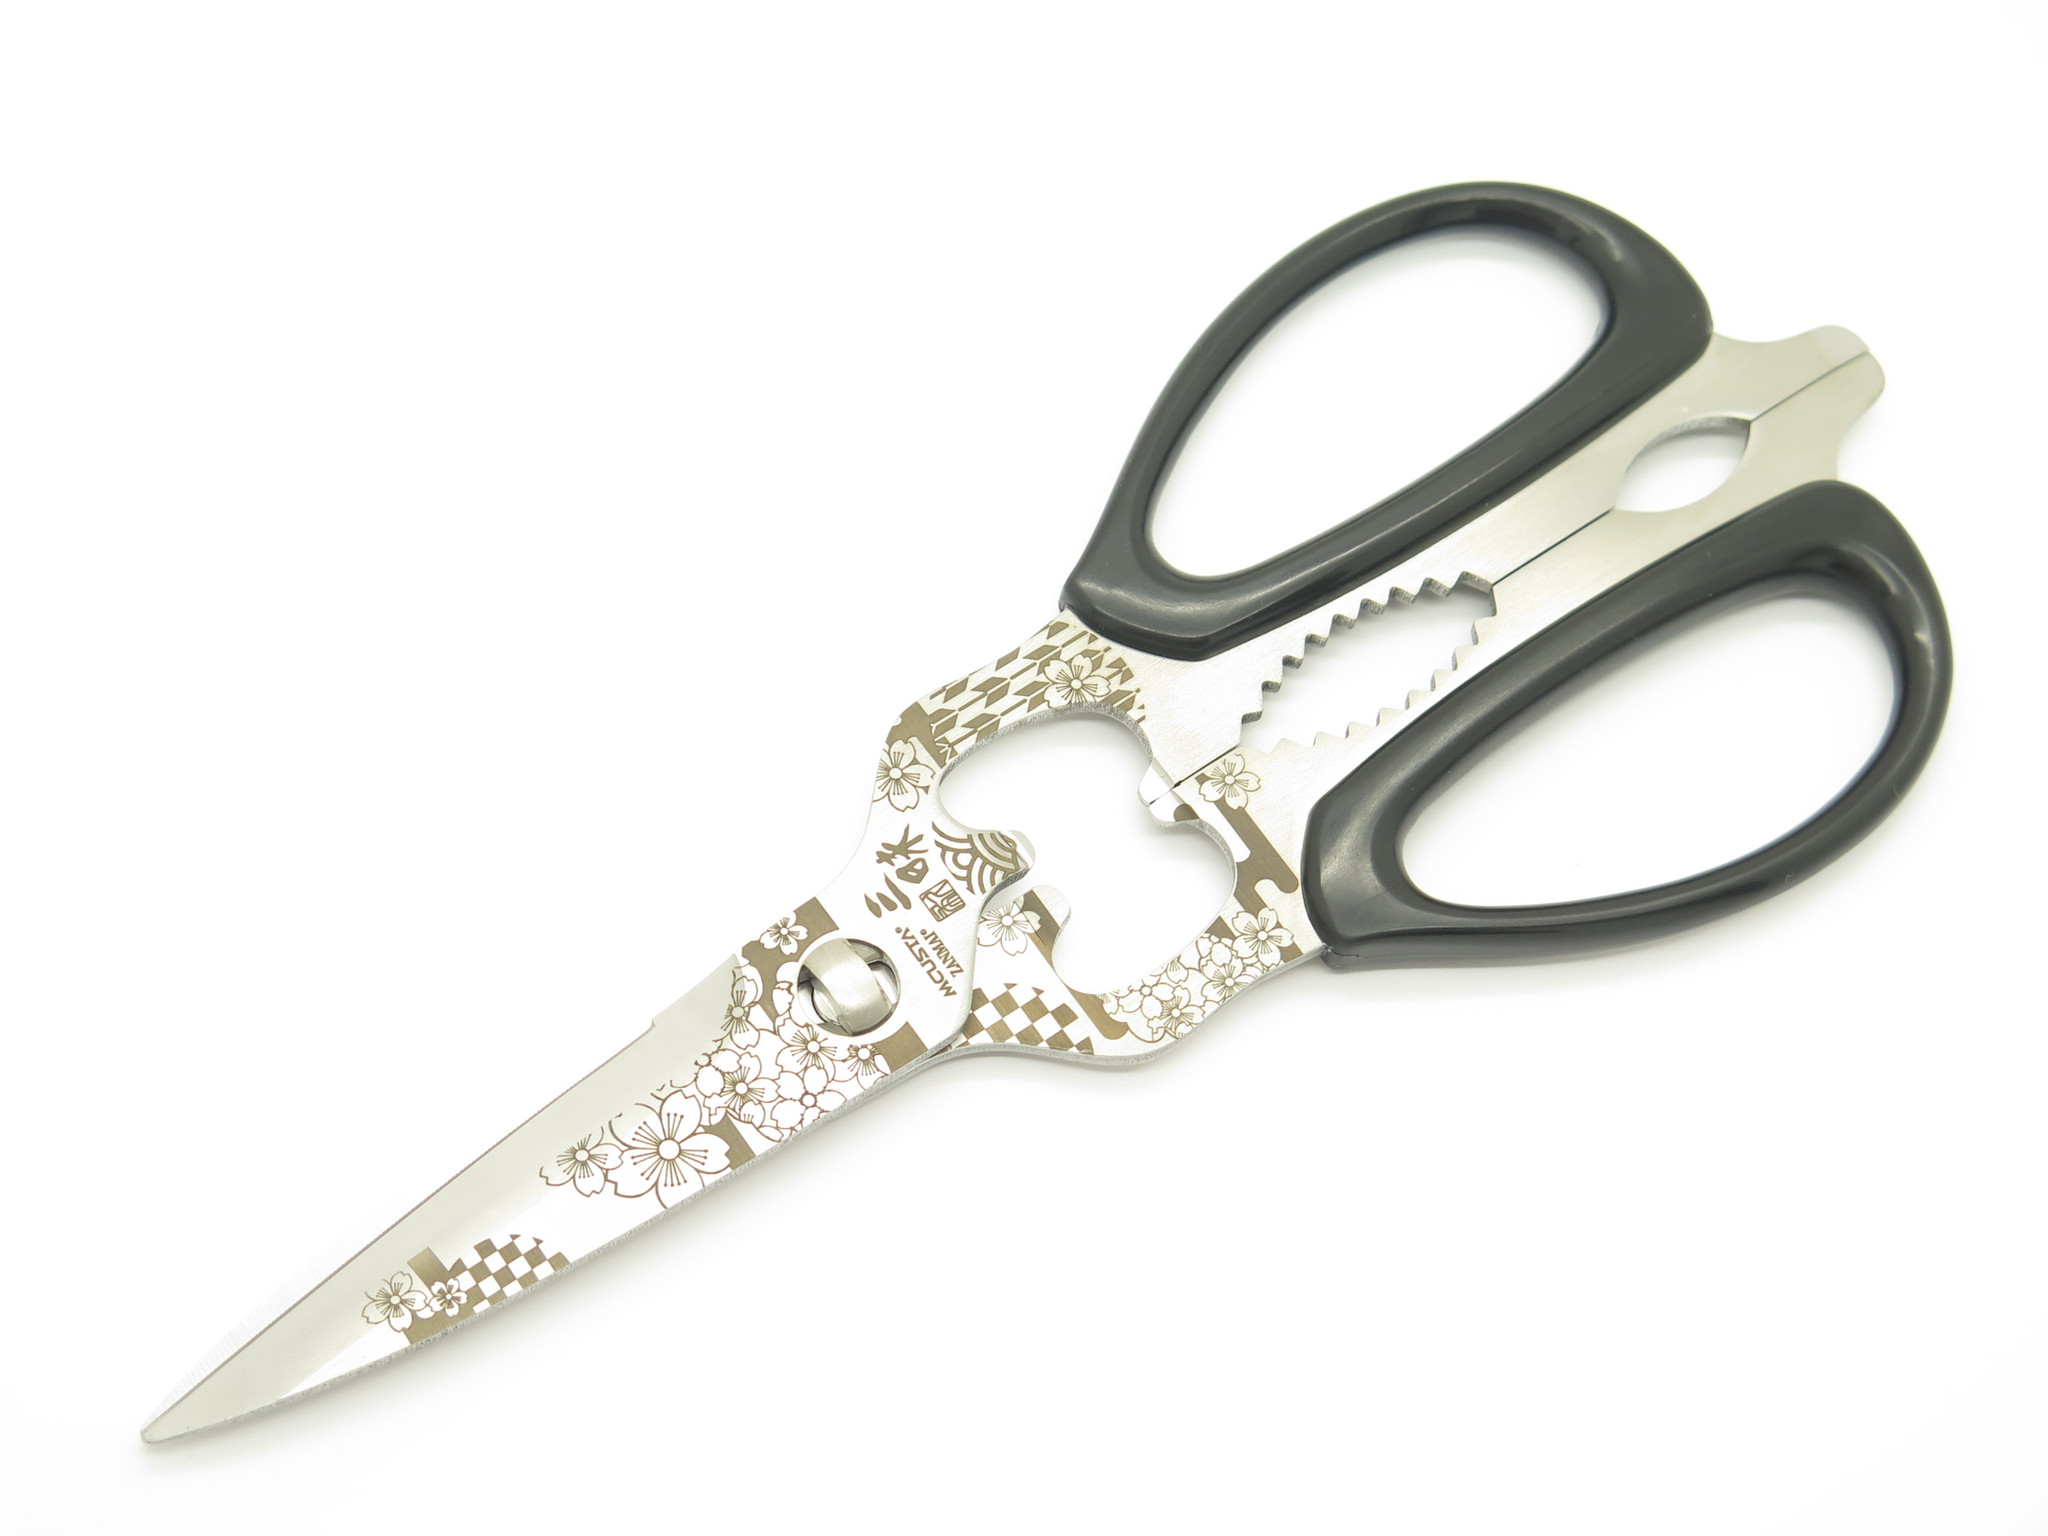 Kitchen Shears | Kitchen Scissors | Poultry Shears | Cooking Scissors | Vegetable Scissors | Best Stainless Steel Shears, Silver | Seido Knives